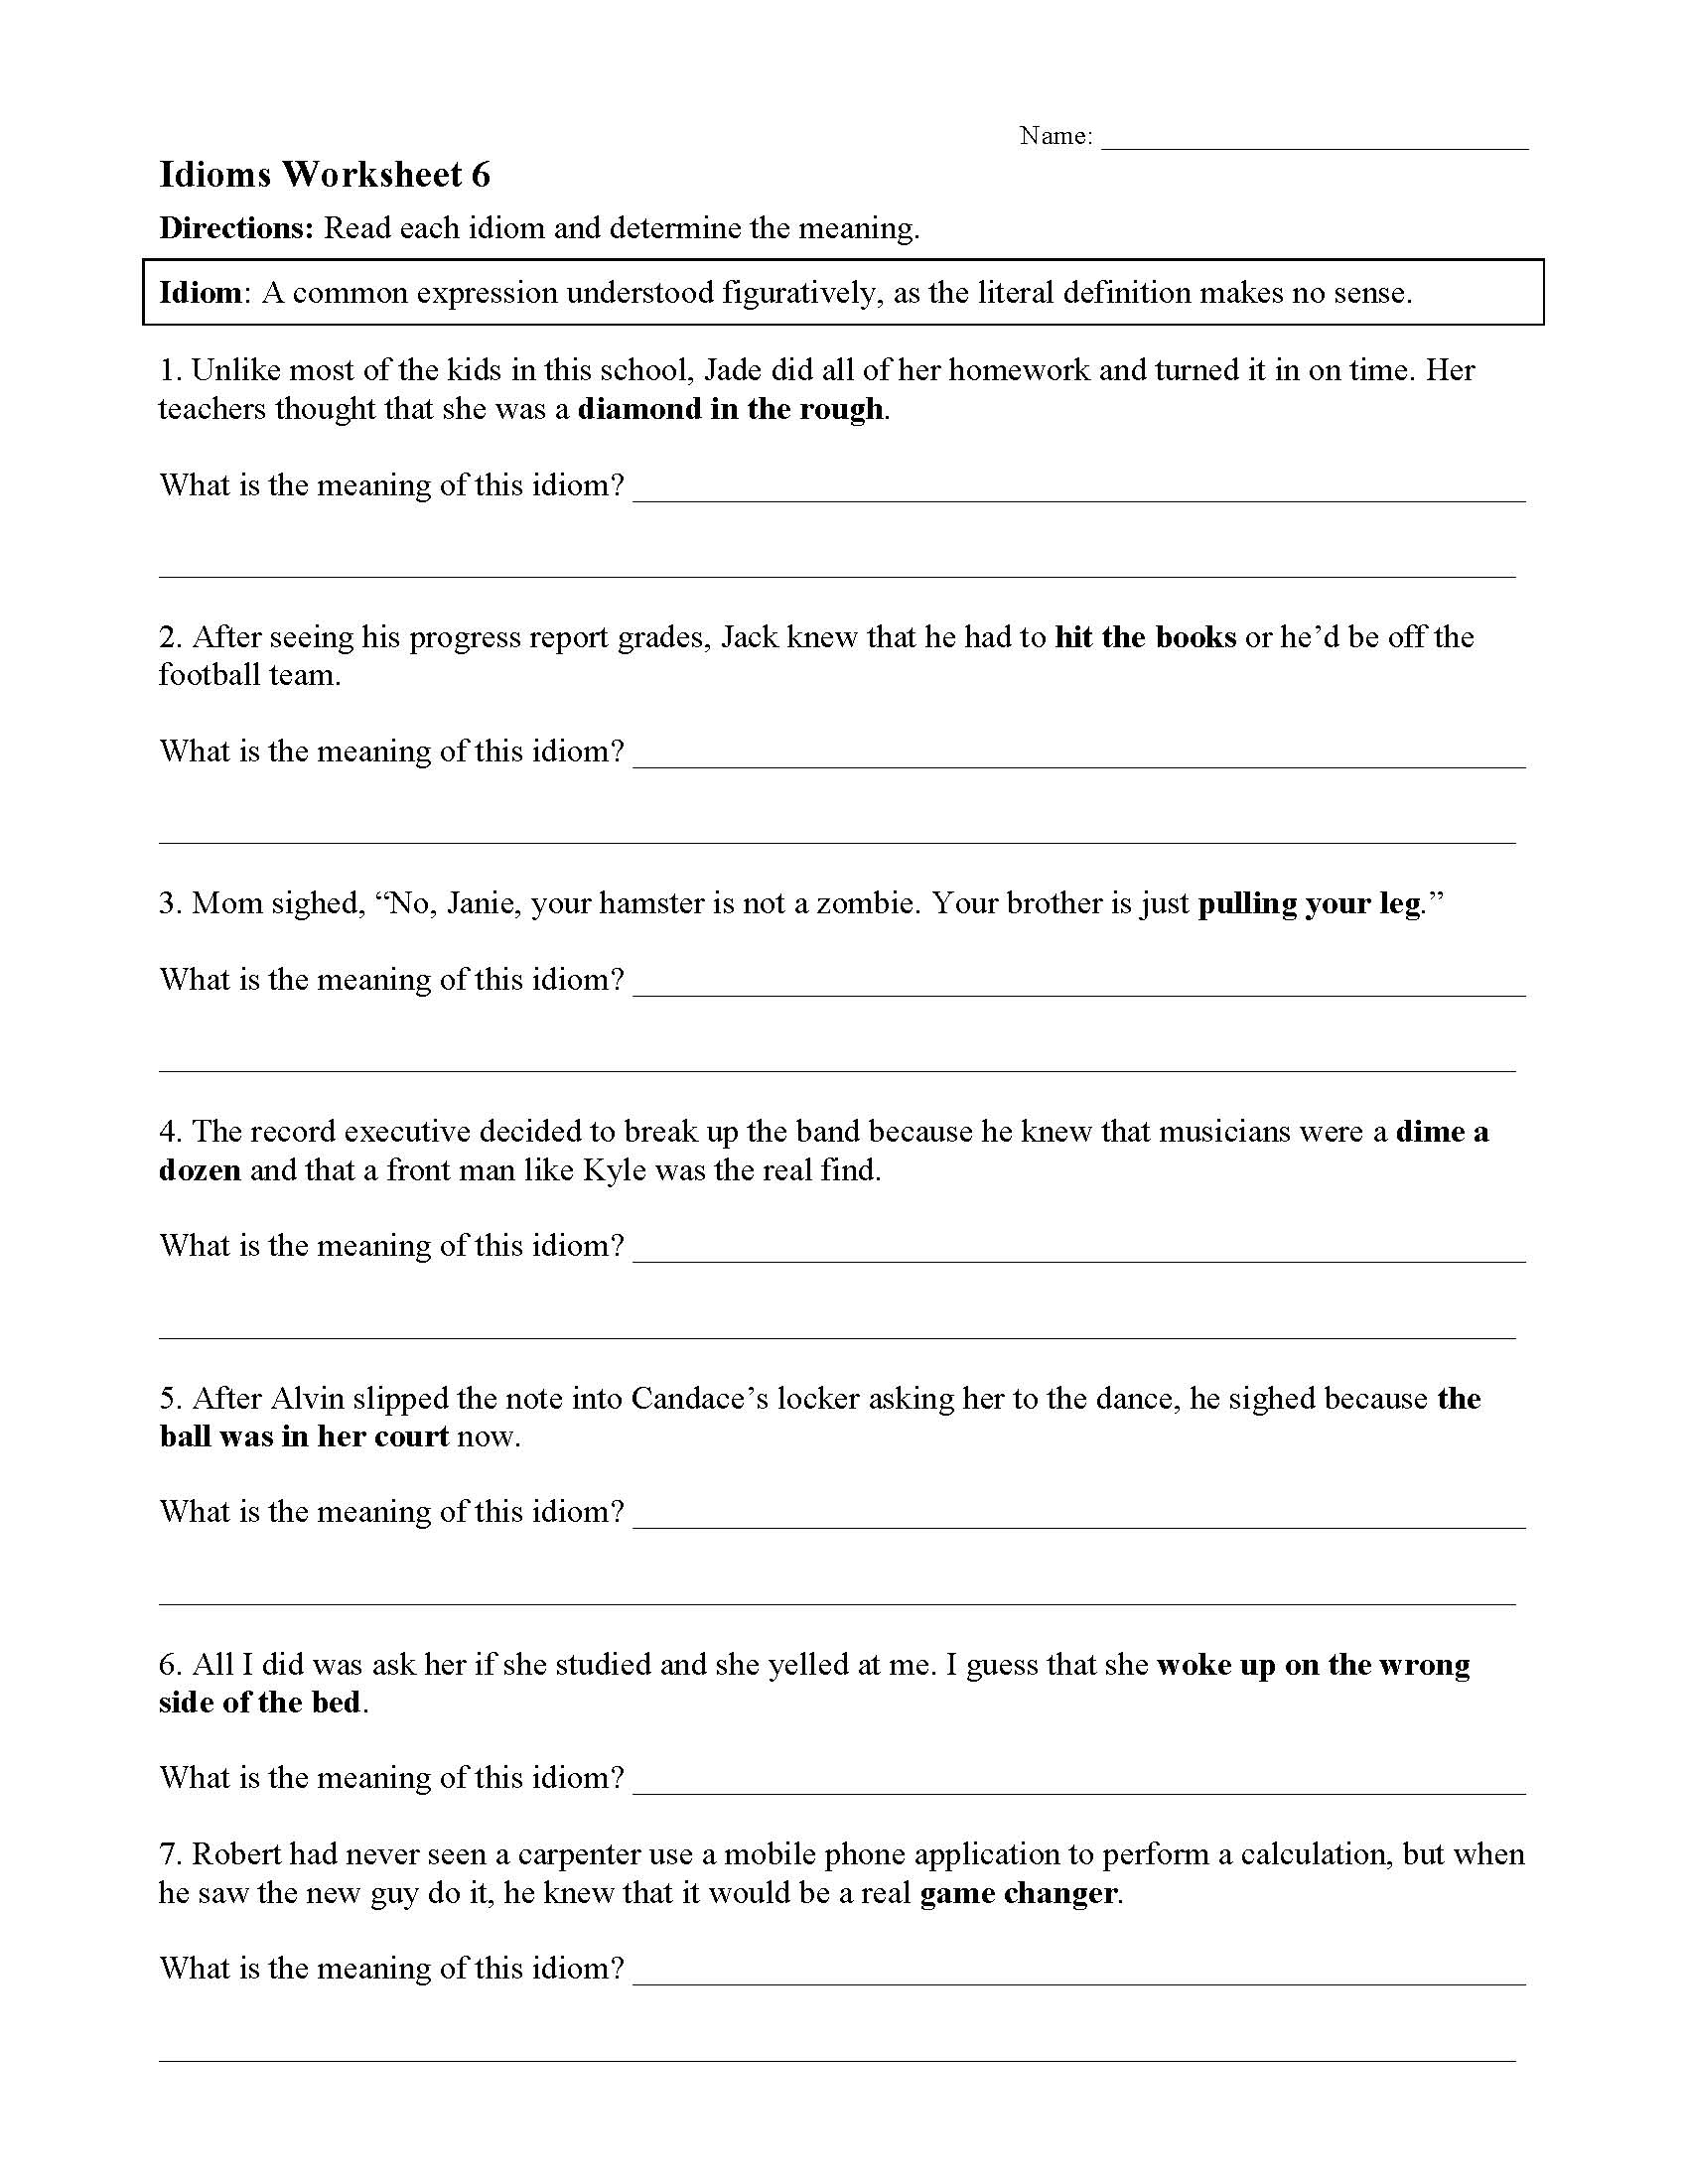 idiom-worksheet-6-reading-activity